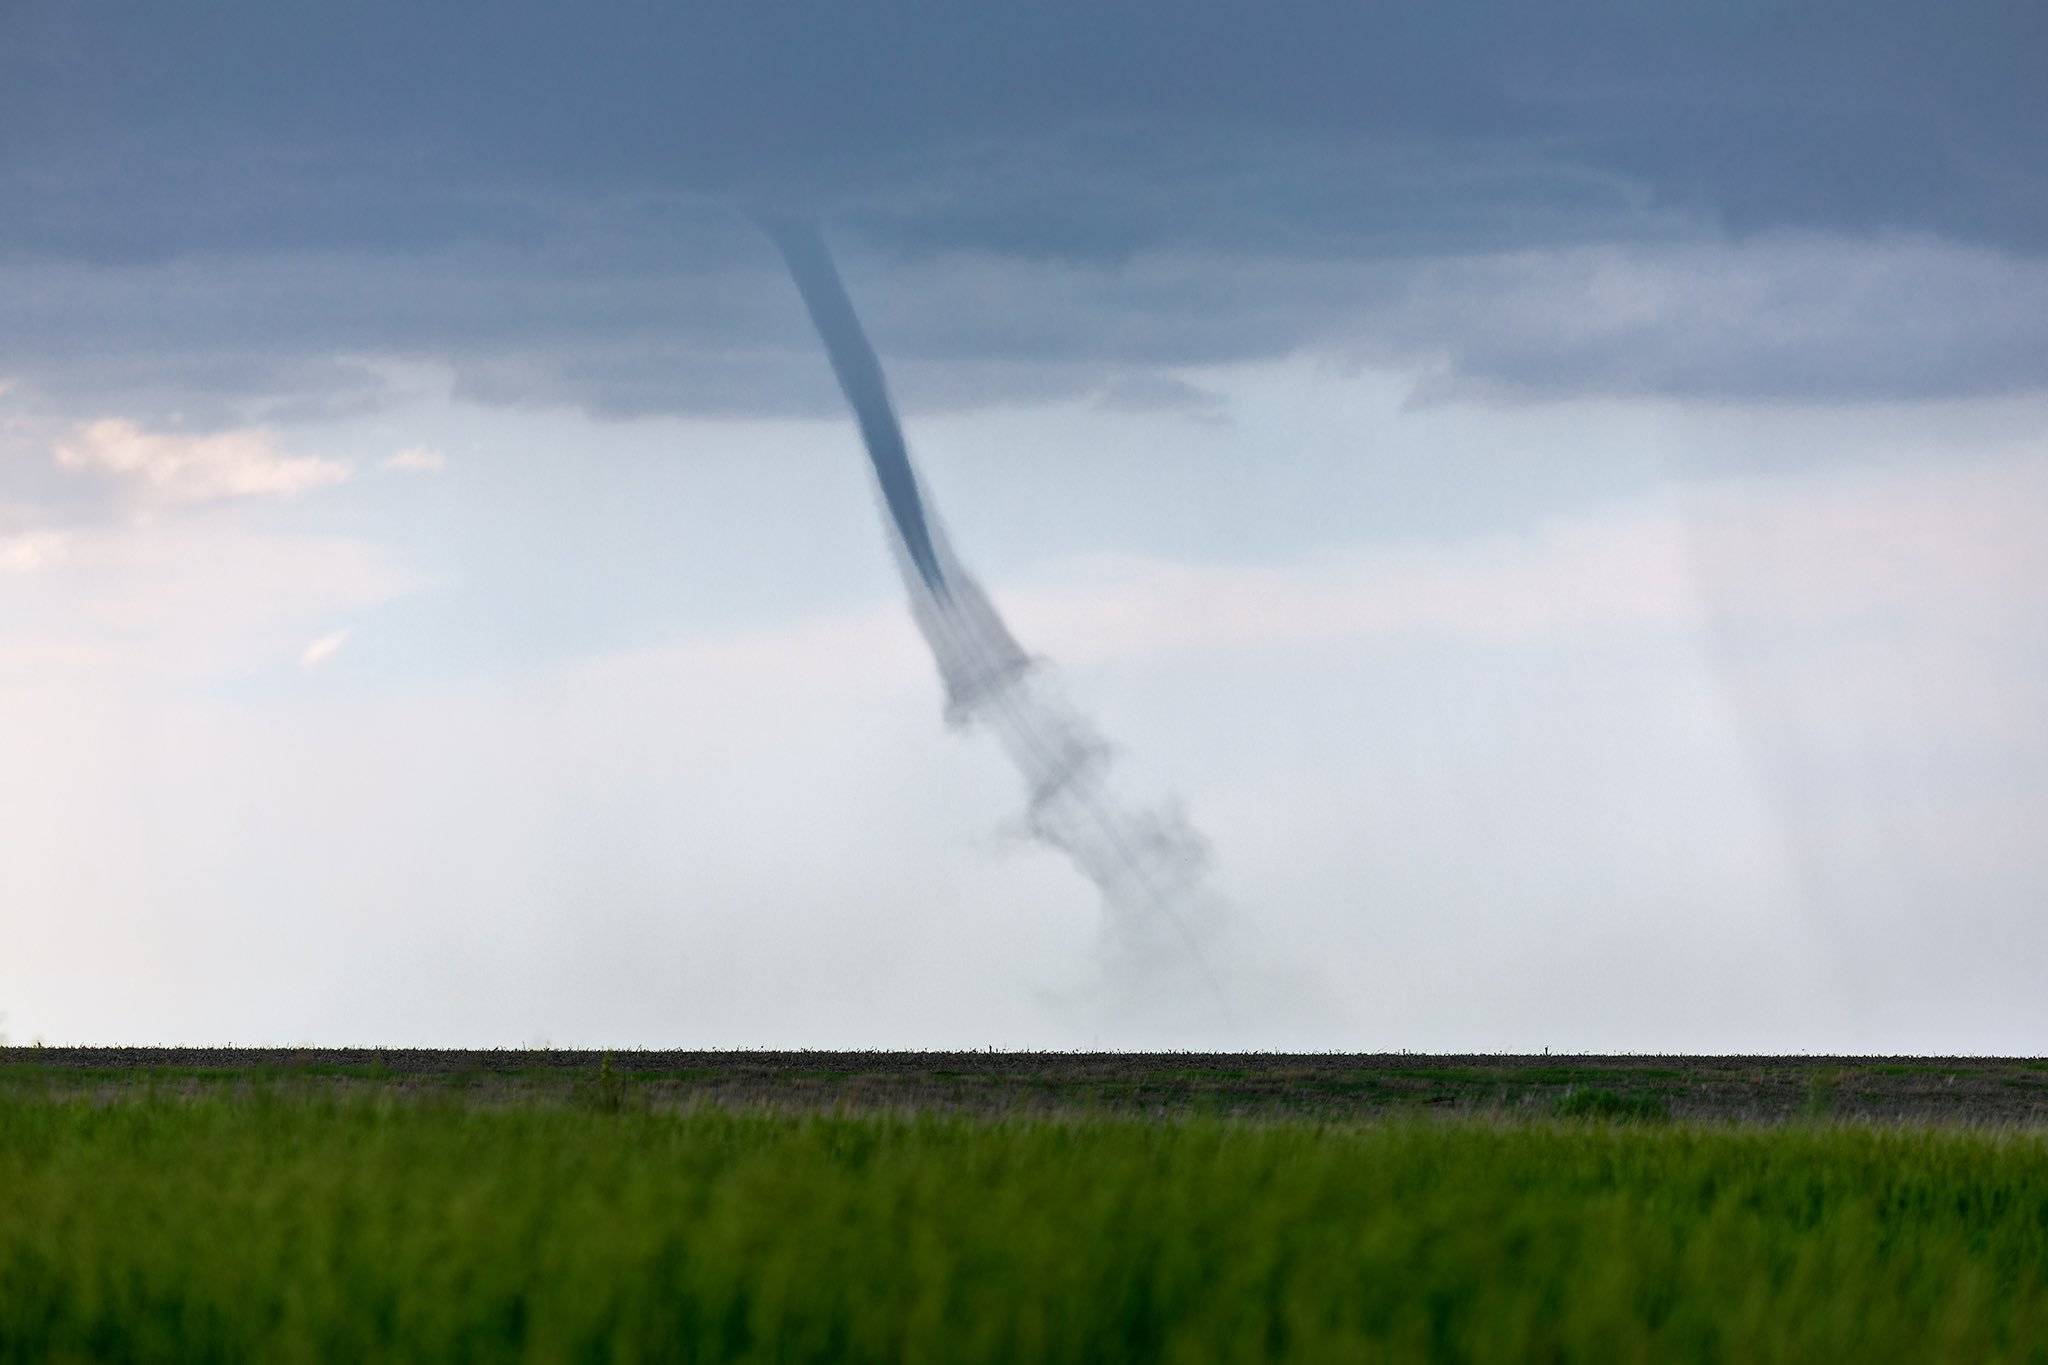 A landspout tornado with beautiful, helical vortex sheathing, dancing across a farm field near St. Francis, Kansas by John Sirlin @SirlinJohn